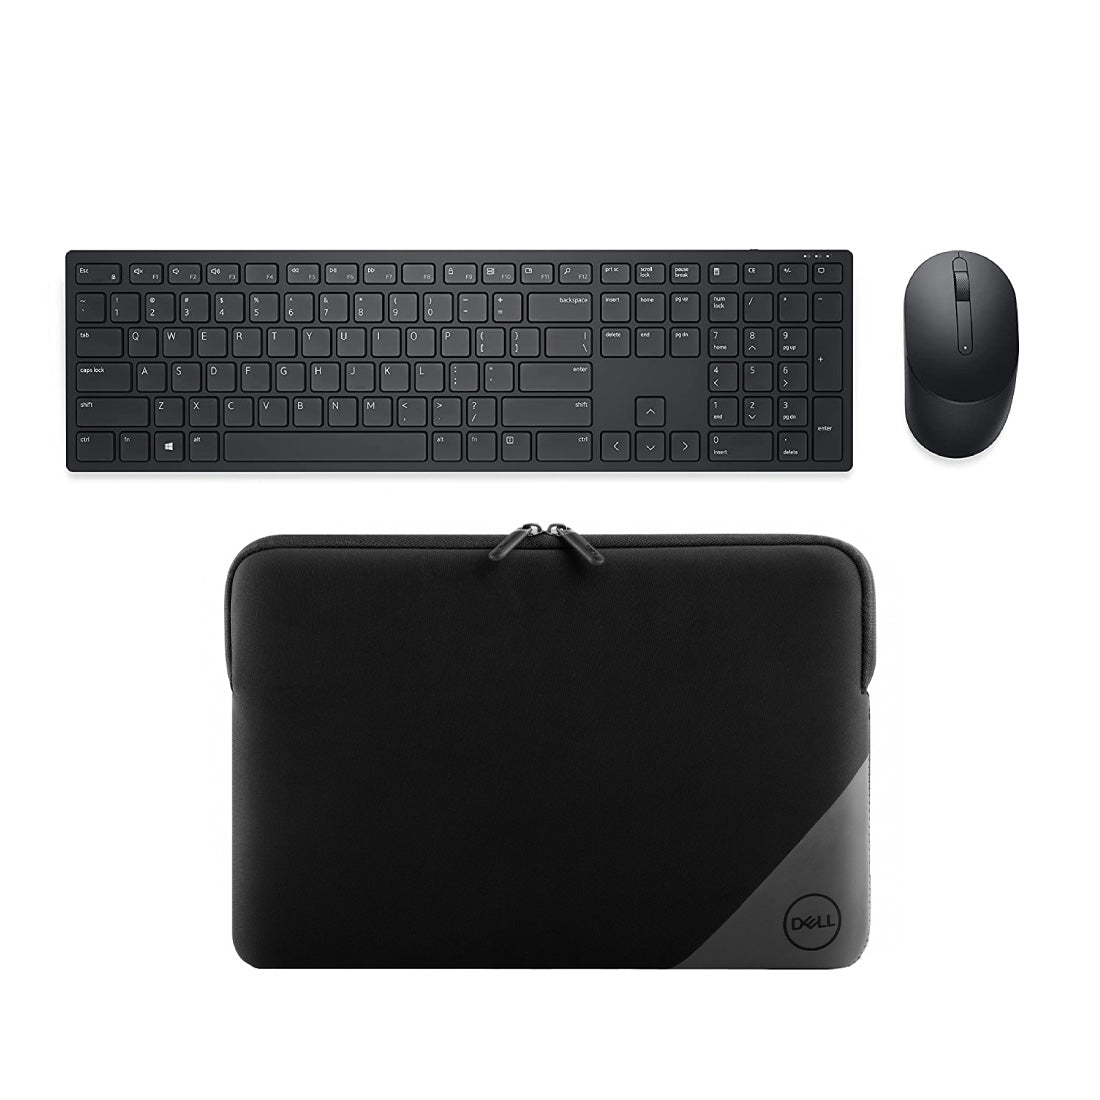 Dell KM5221W Pro Wireless Keyboard and Mouse - Black - كييبورد و فأرة - Store 974 | ستور ٩٧٤